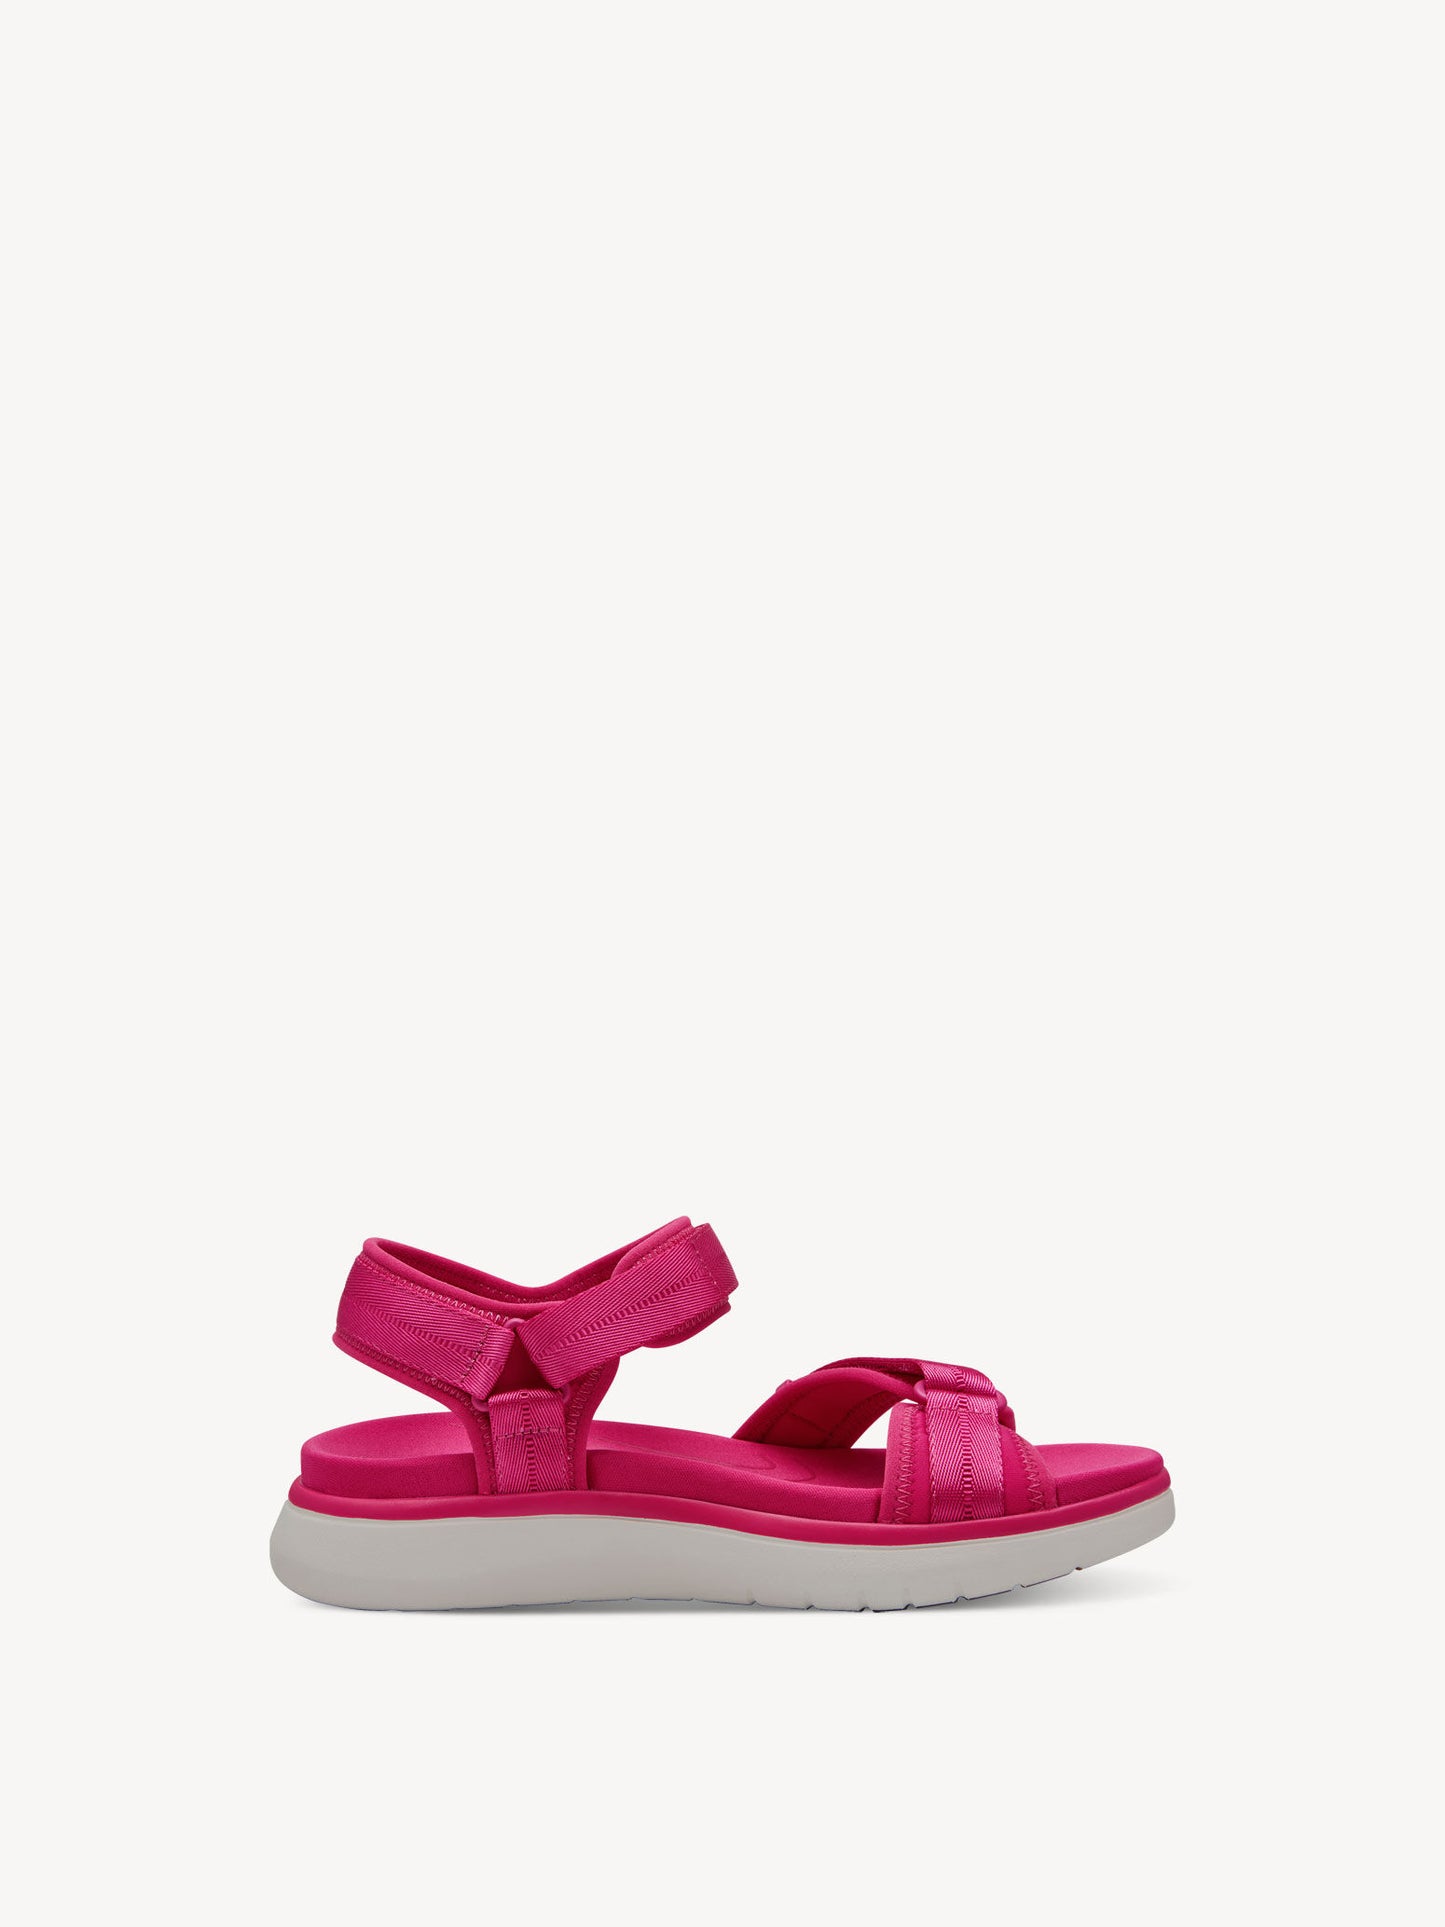 Tamaris Women's 1-28262-42 Strap Sandals Fuxia Pink